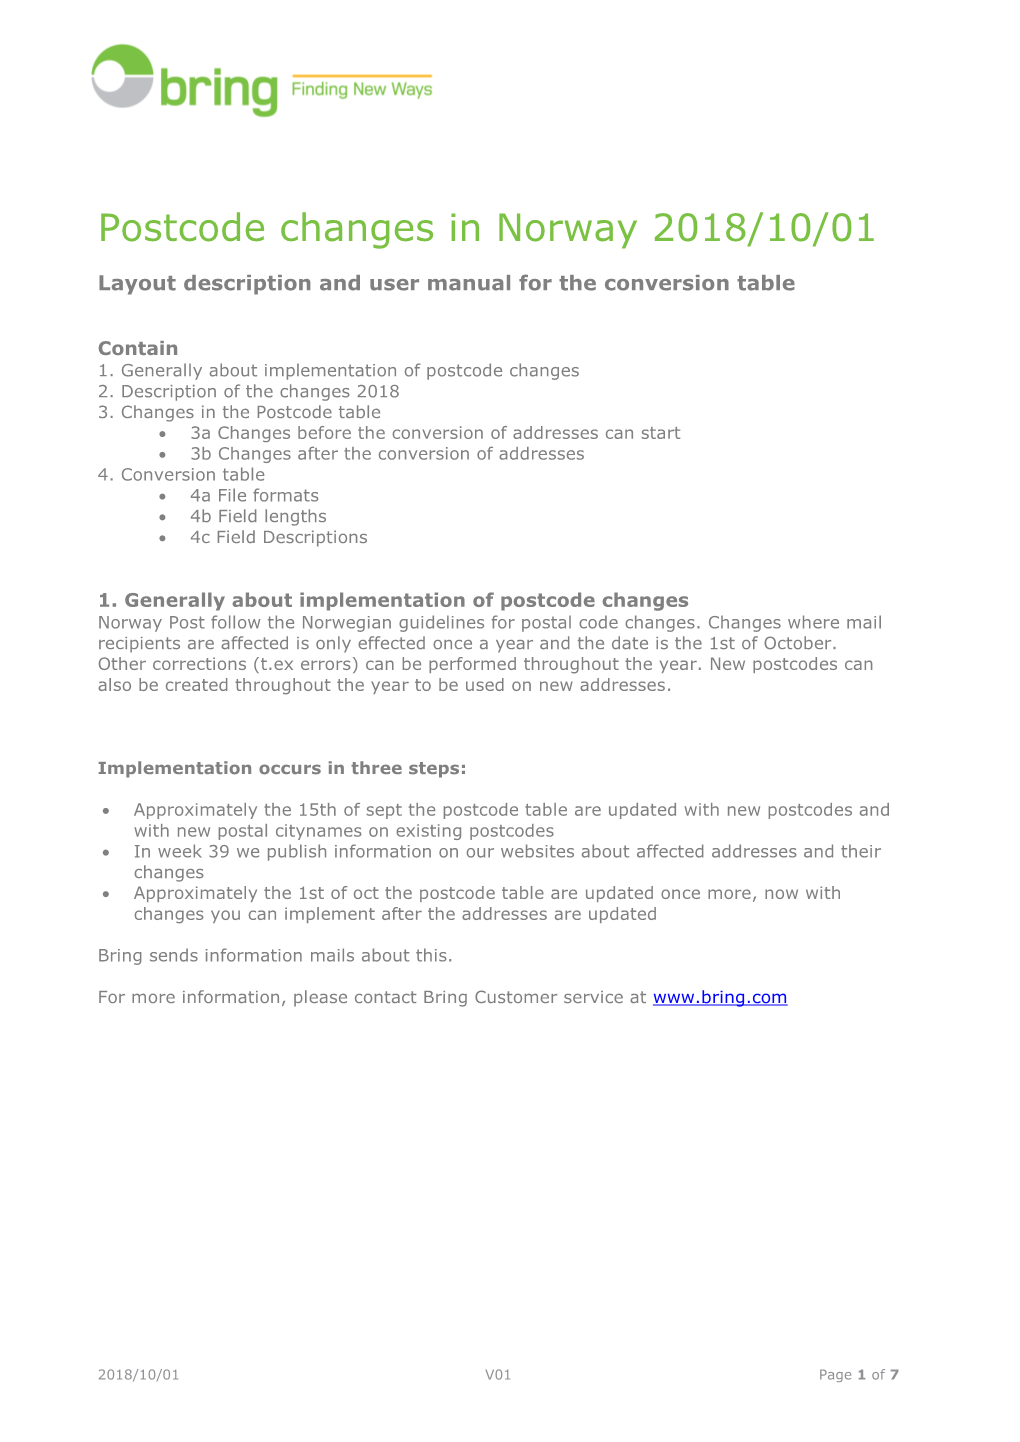 Postcode Changes in Norway 2018/10/01